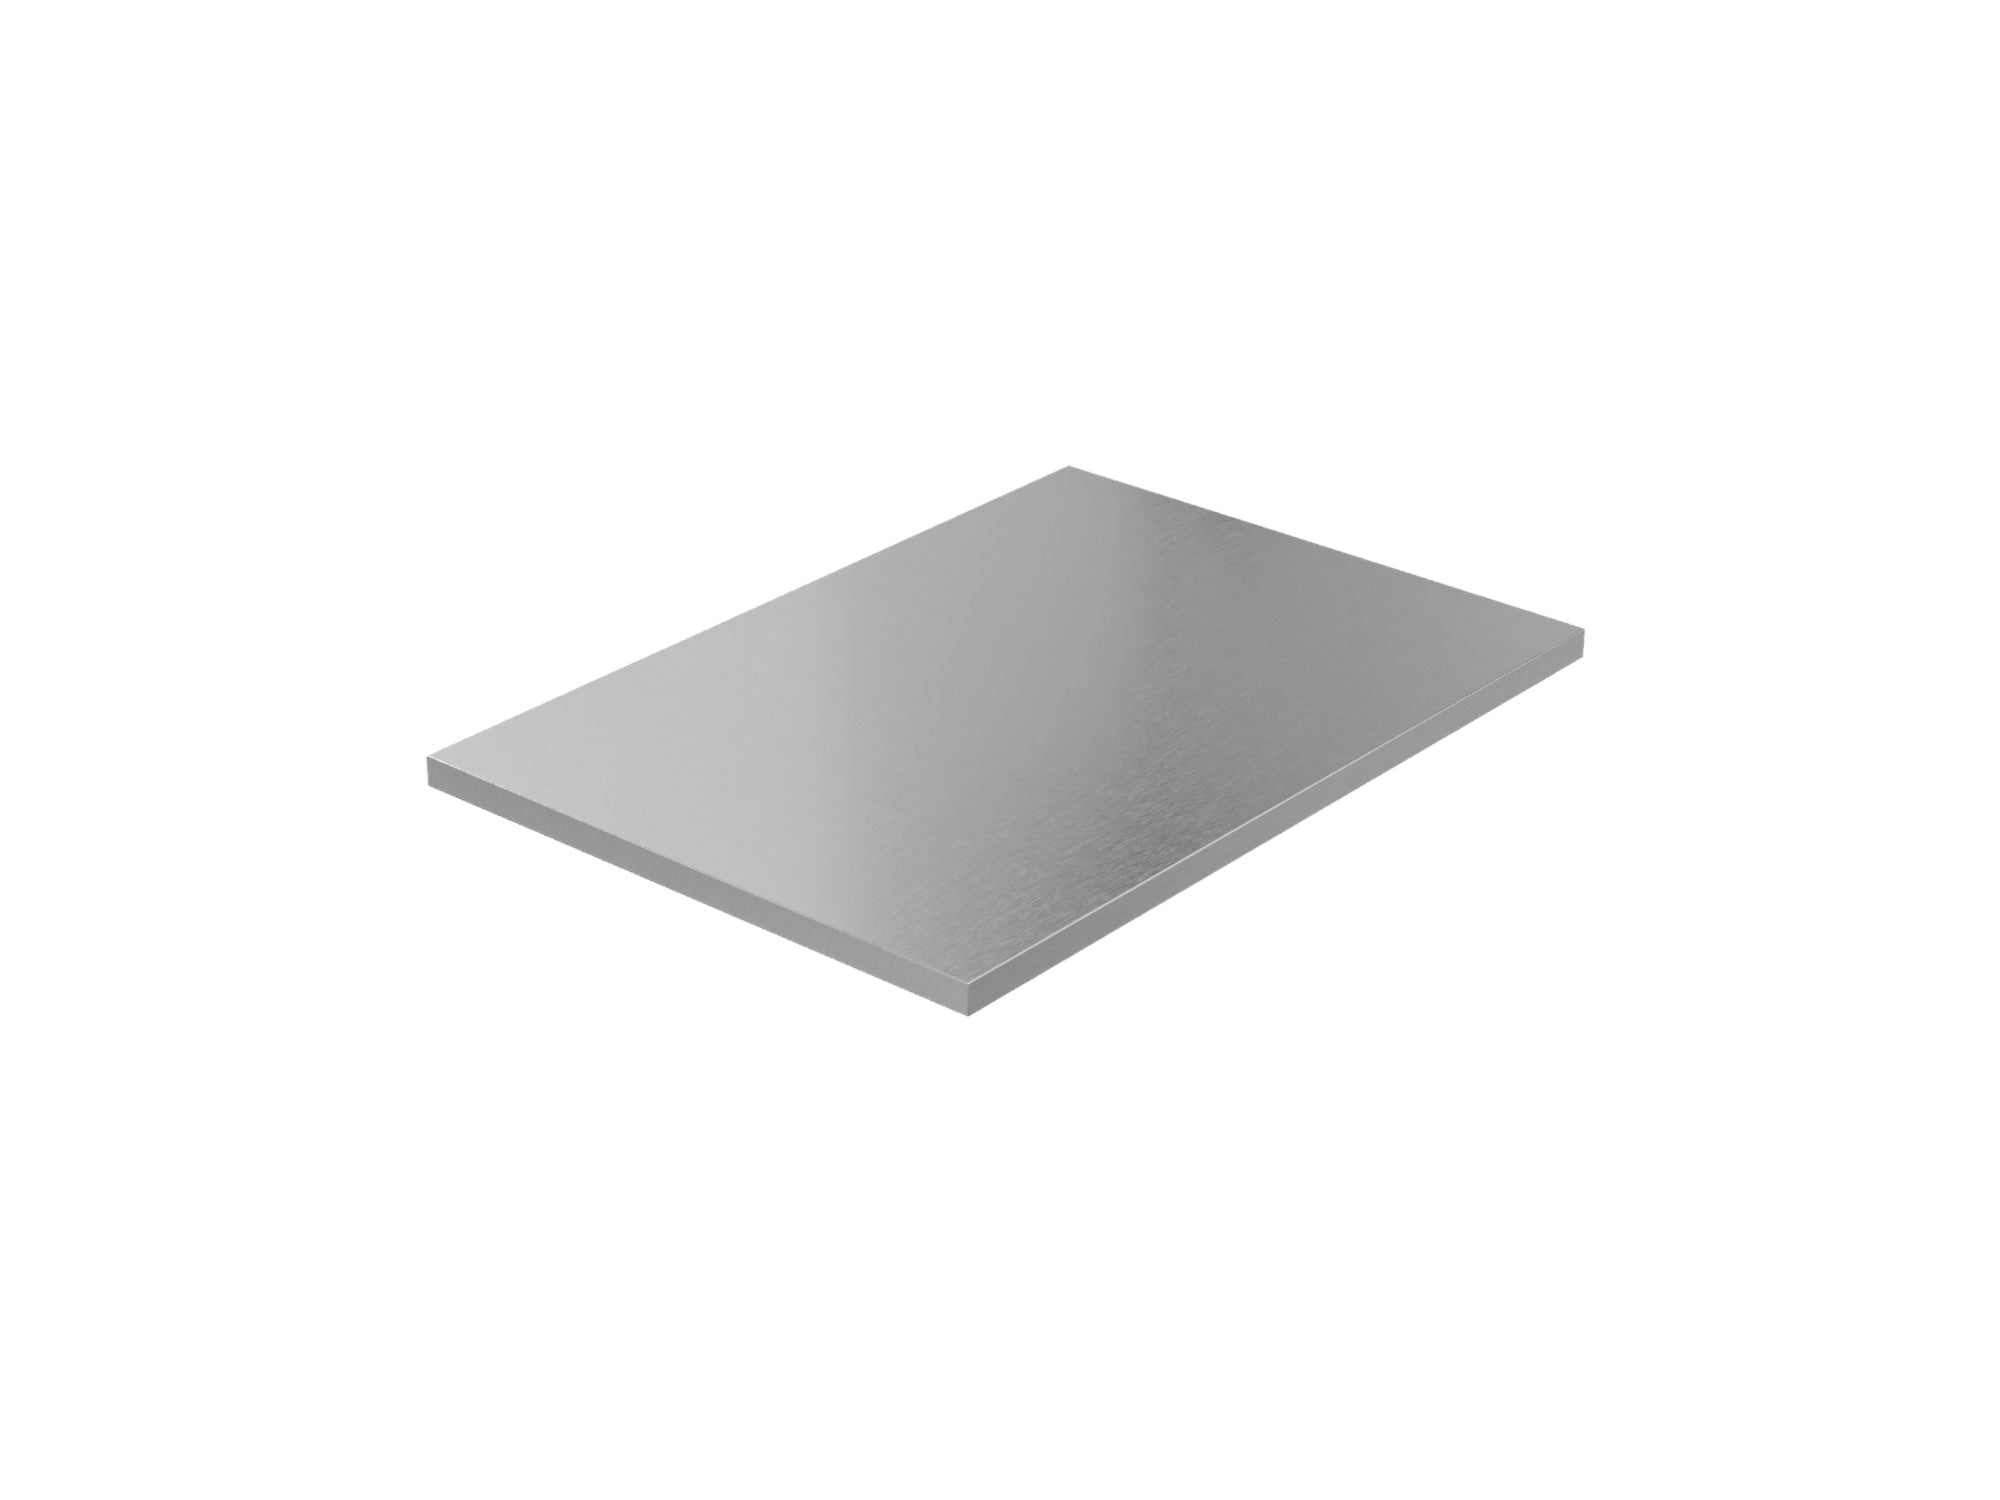 Signature Outdoor Kitchen Cabinet Stainless Steel Countertop Bundle: 36 in. Countertop